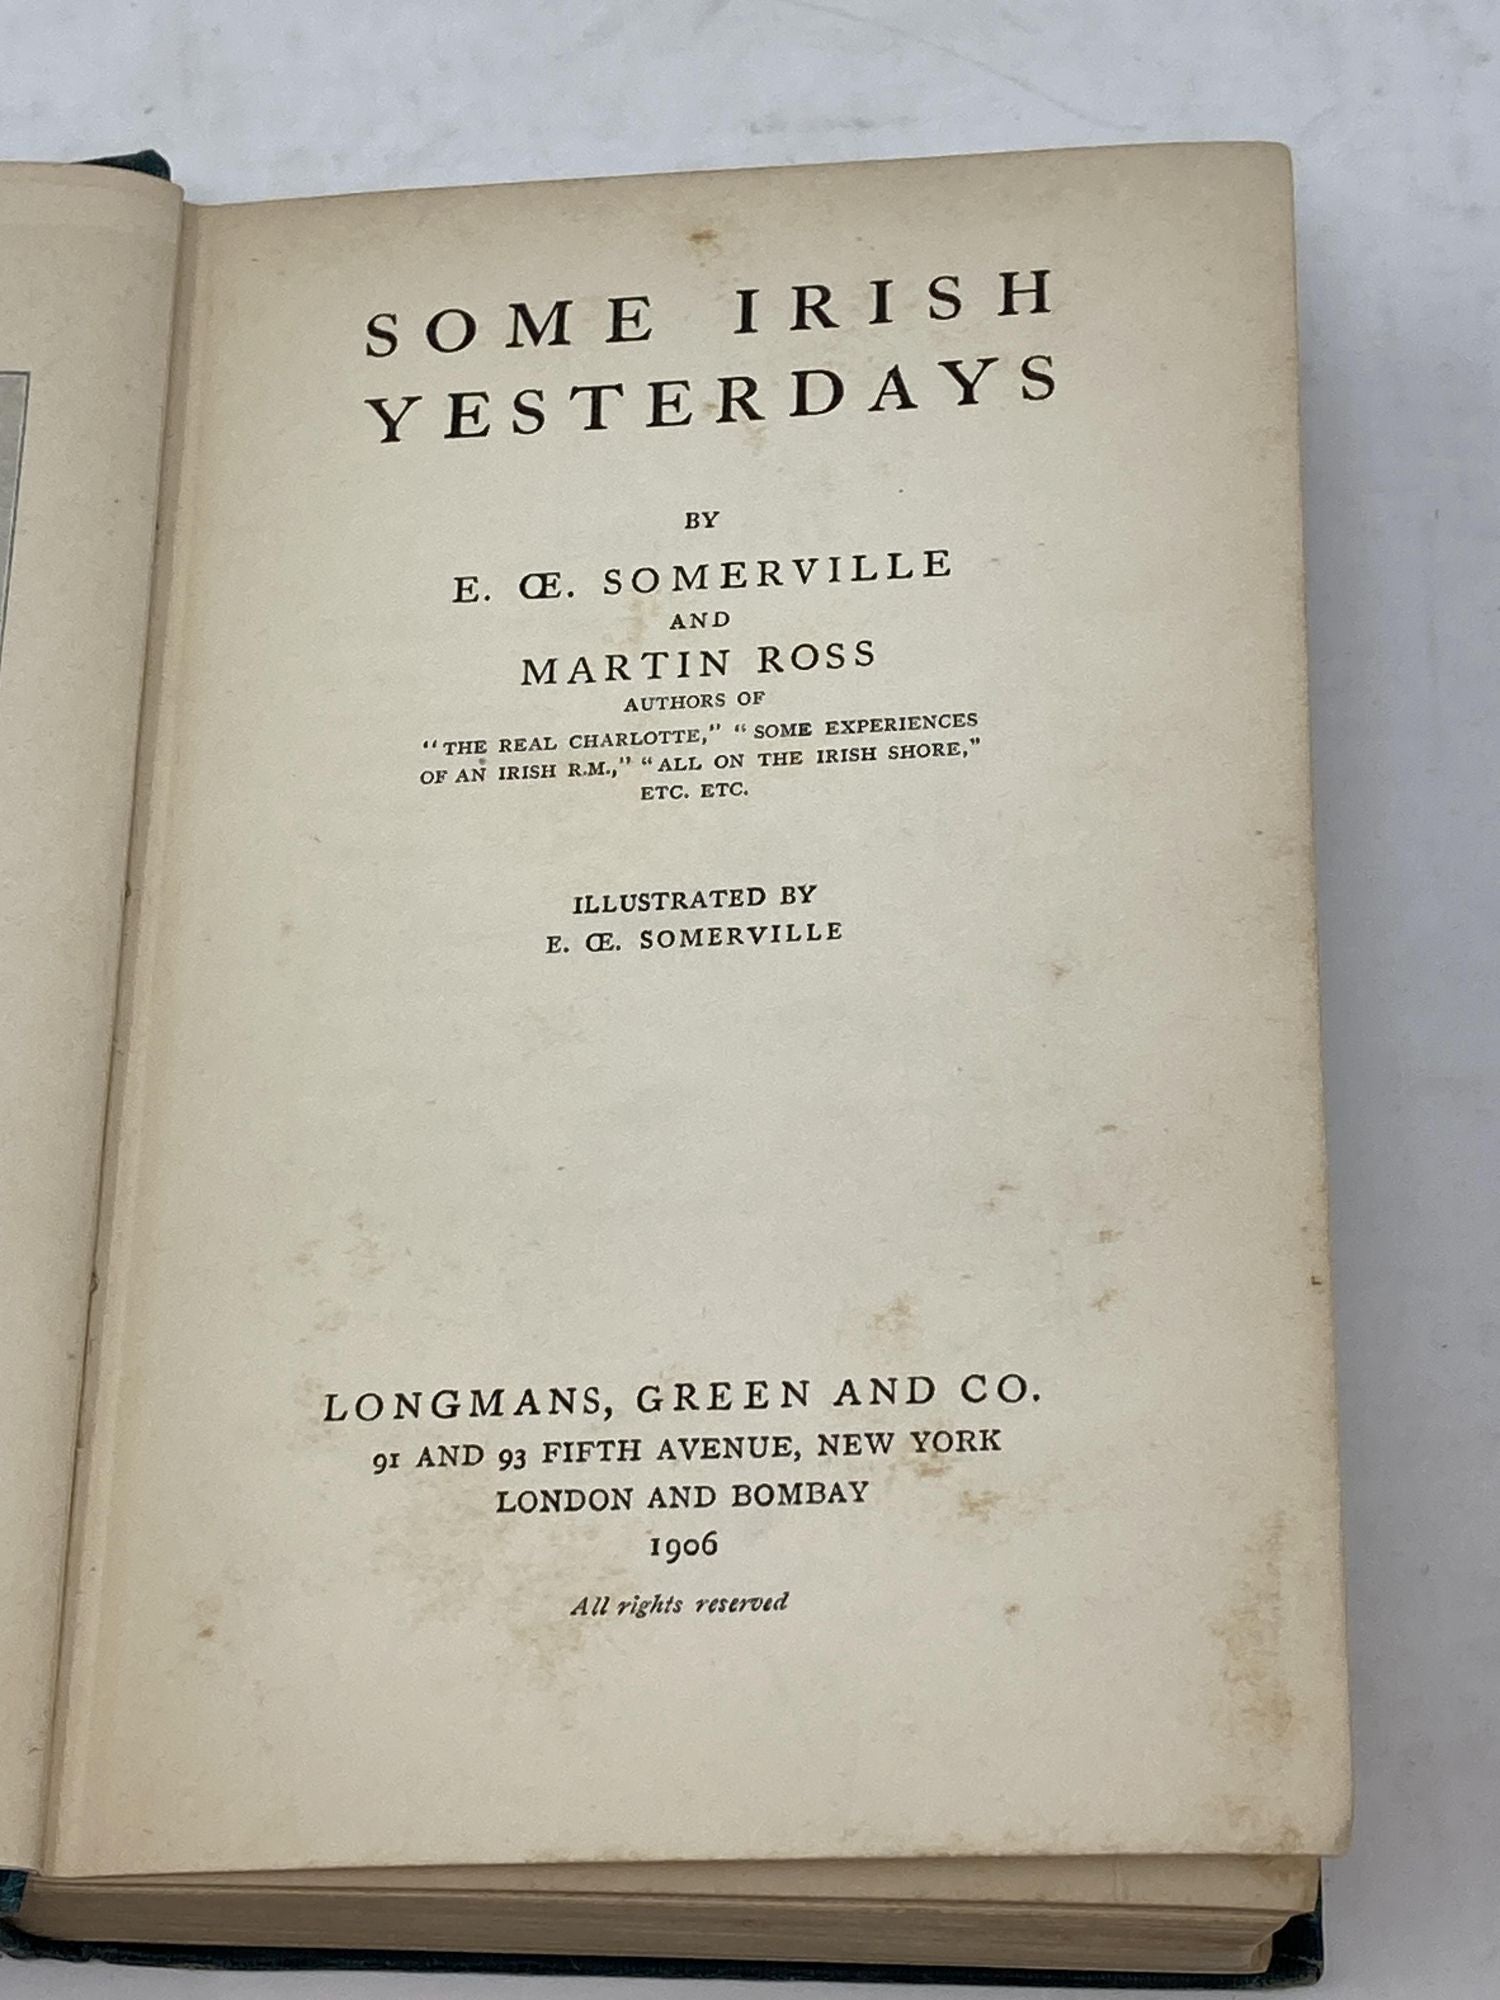 Somerville, E. OE. and Martin Ross - Some Irish Yesterdays